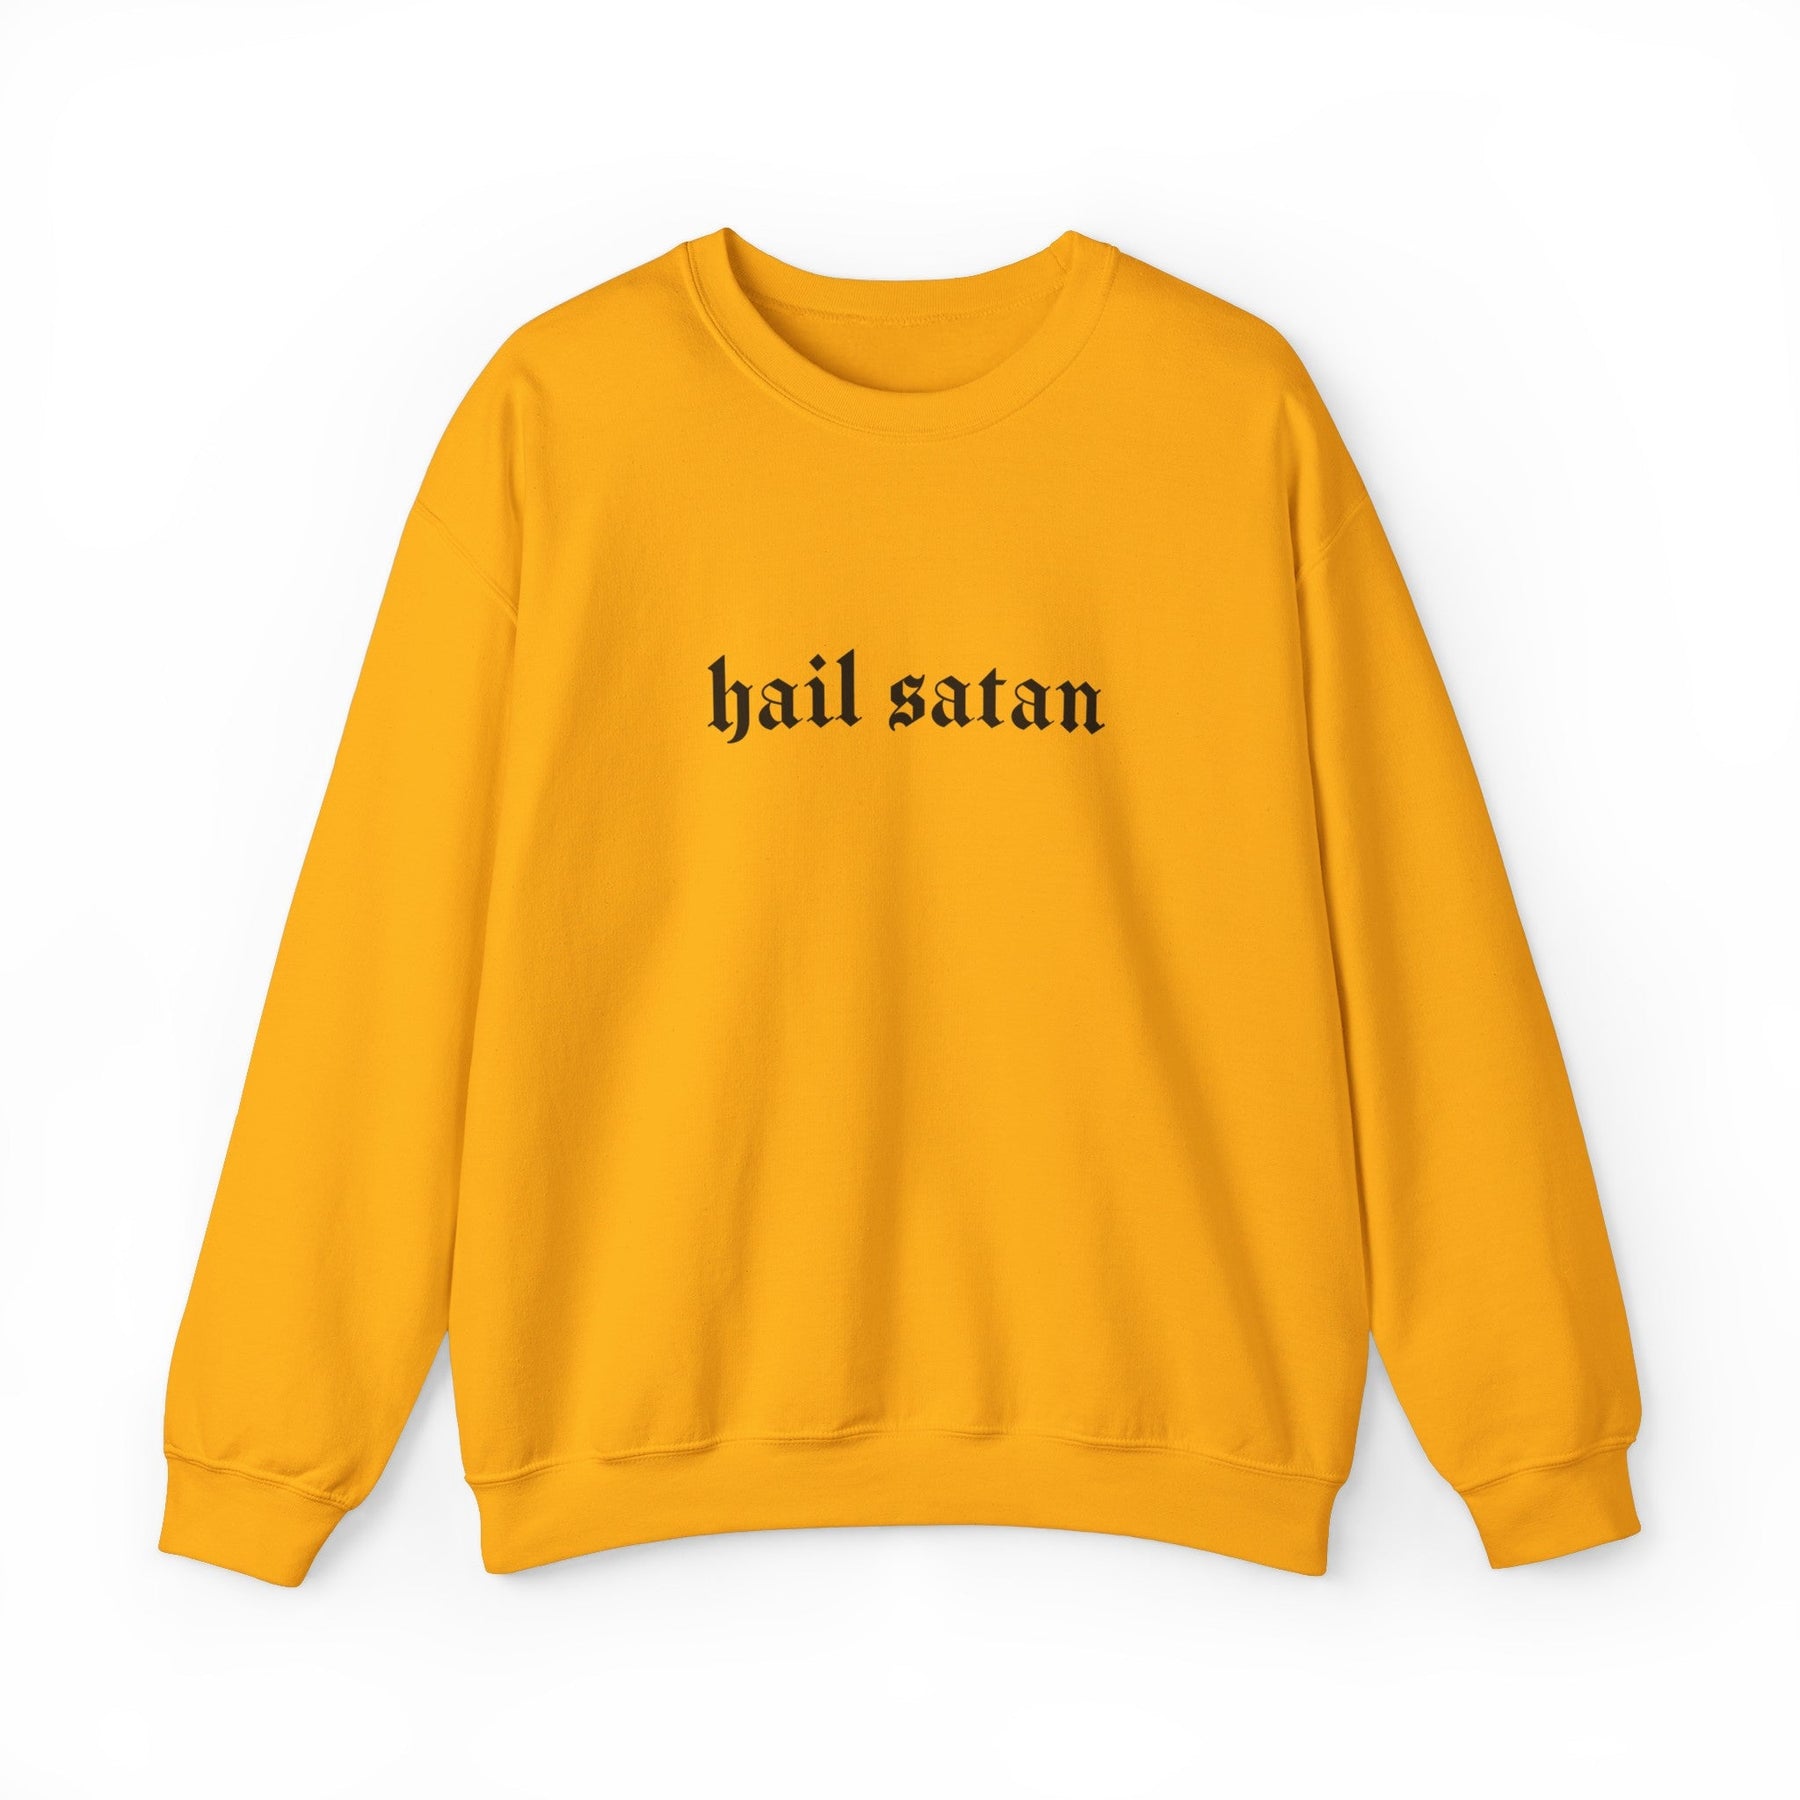 Hail Satan Goth Long Sleeve Crew Neck Sweatshirt - Goth Cloth Co.Sweatshirt12135618583667910781